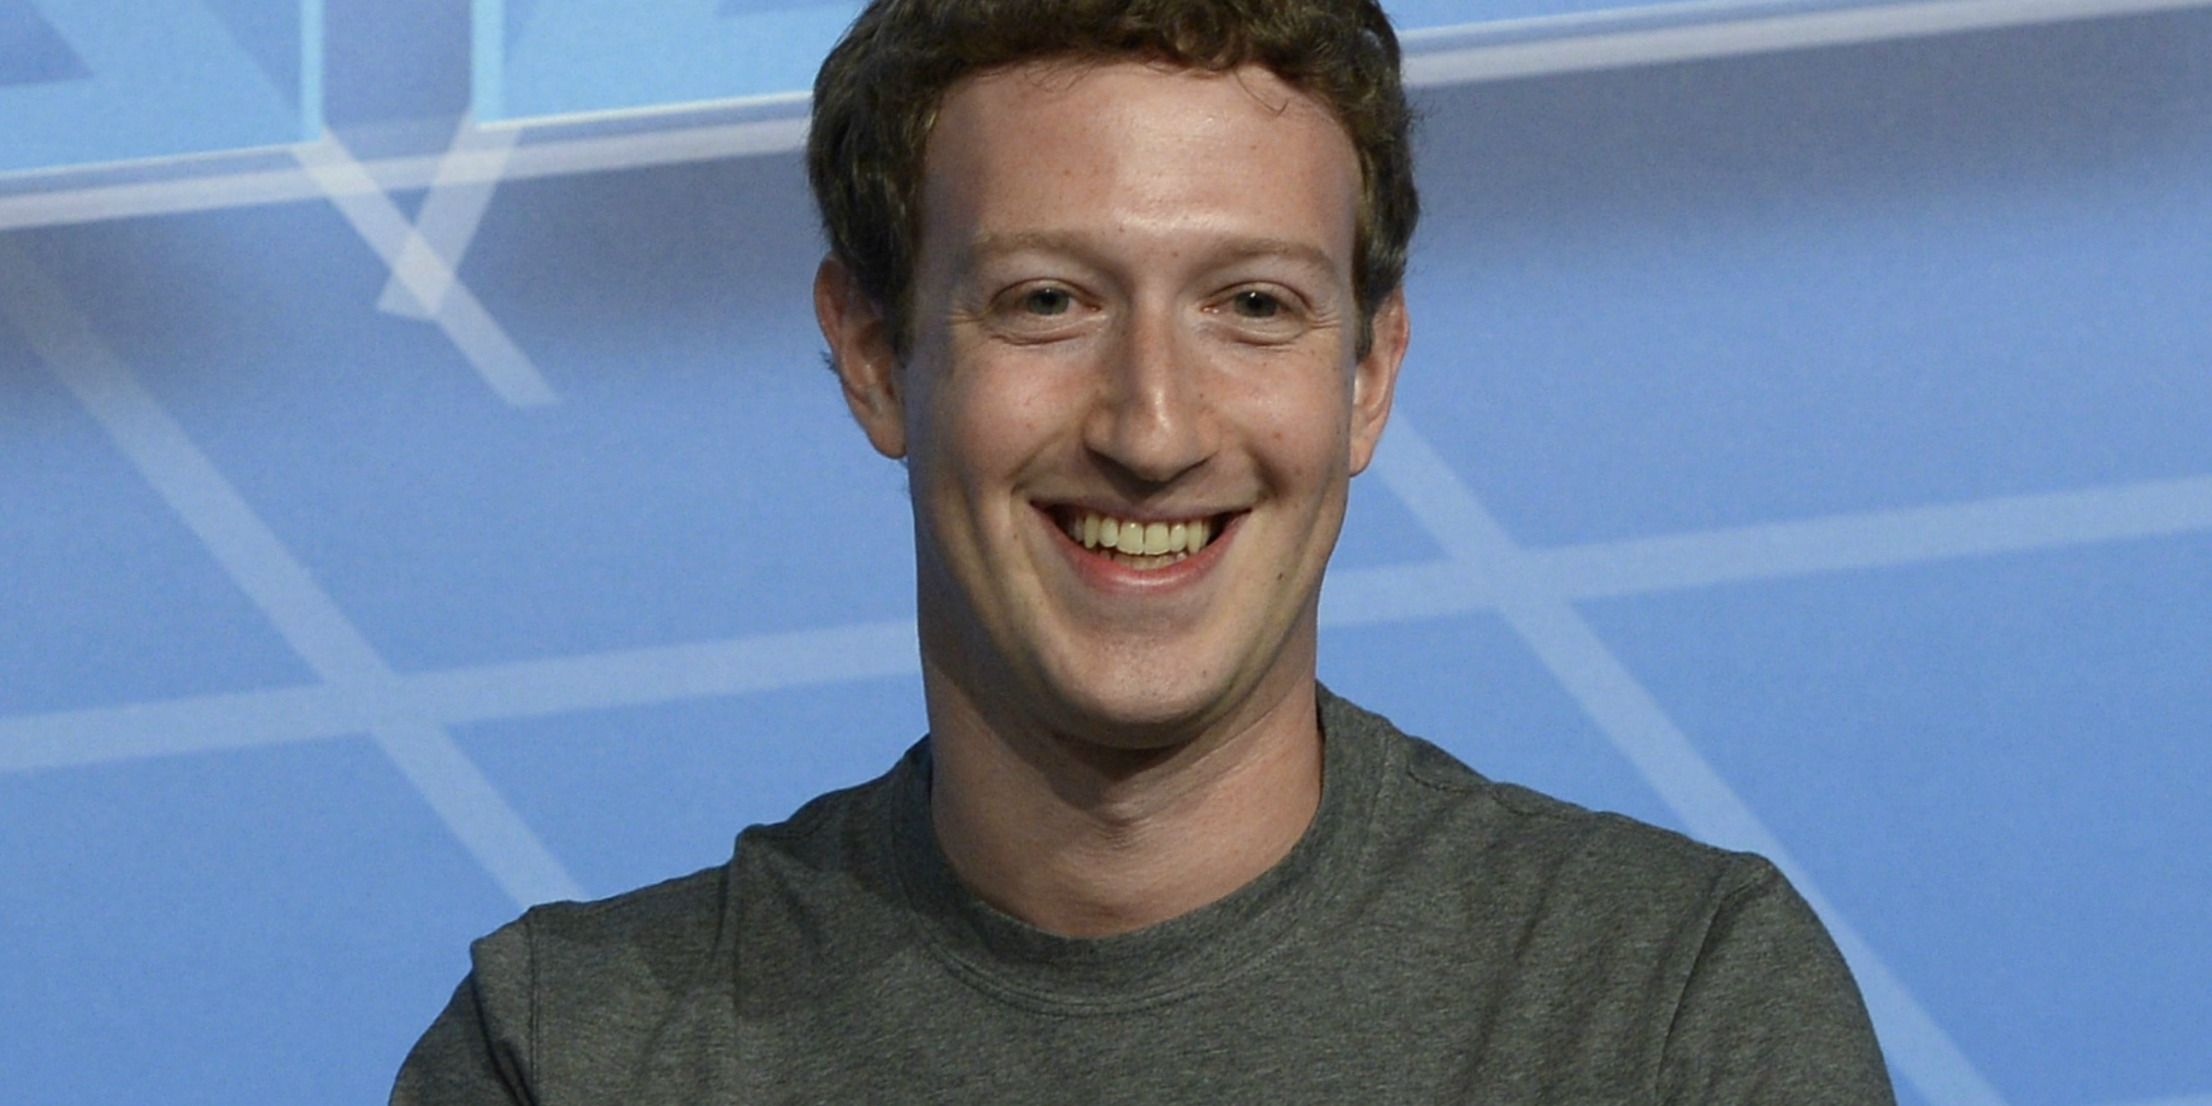 The Mark Zuckerberg Aesthetic - The New York Times